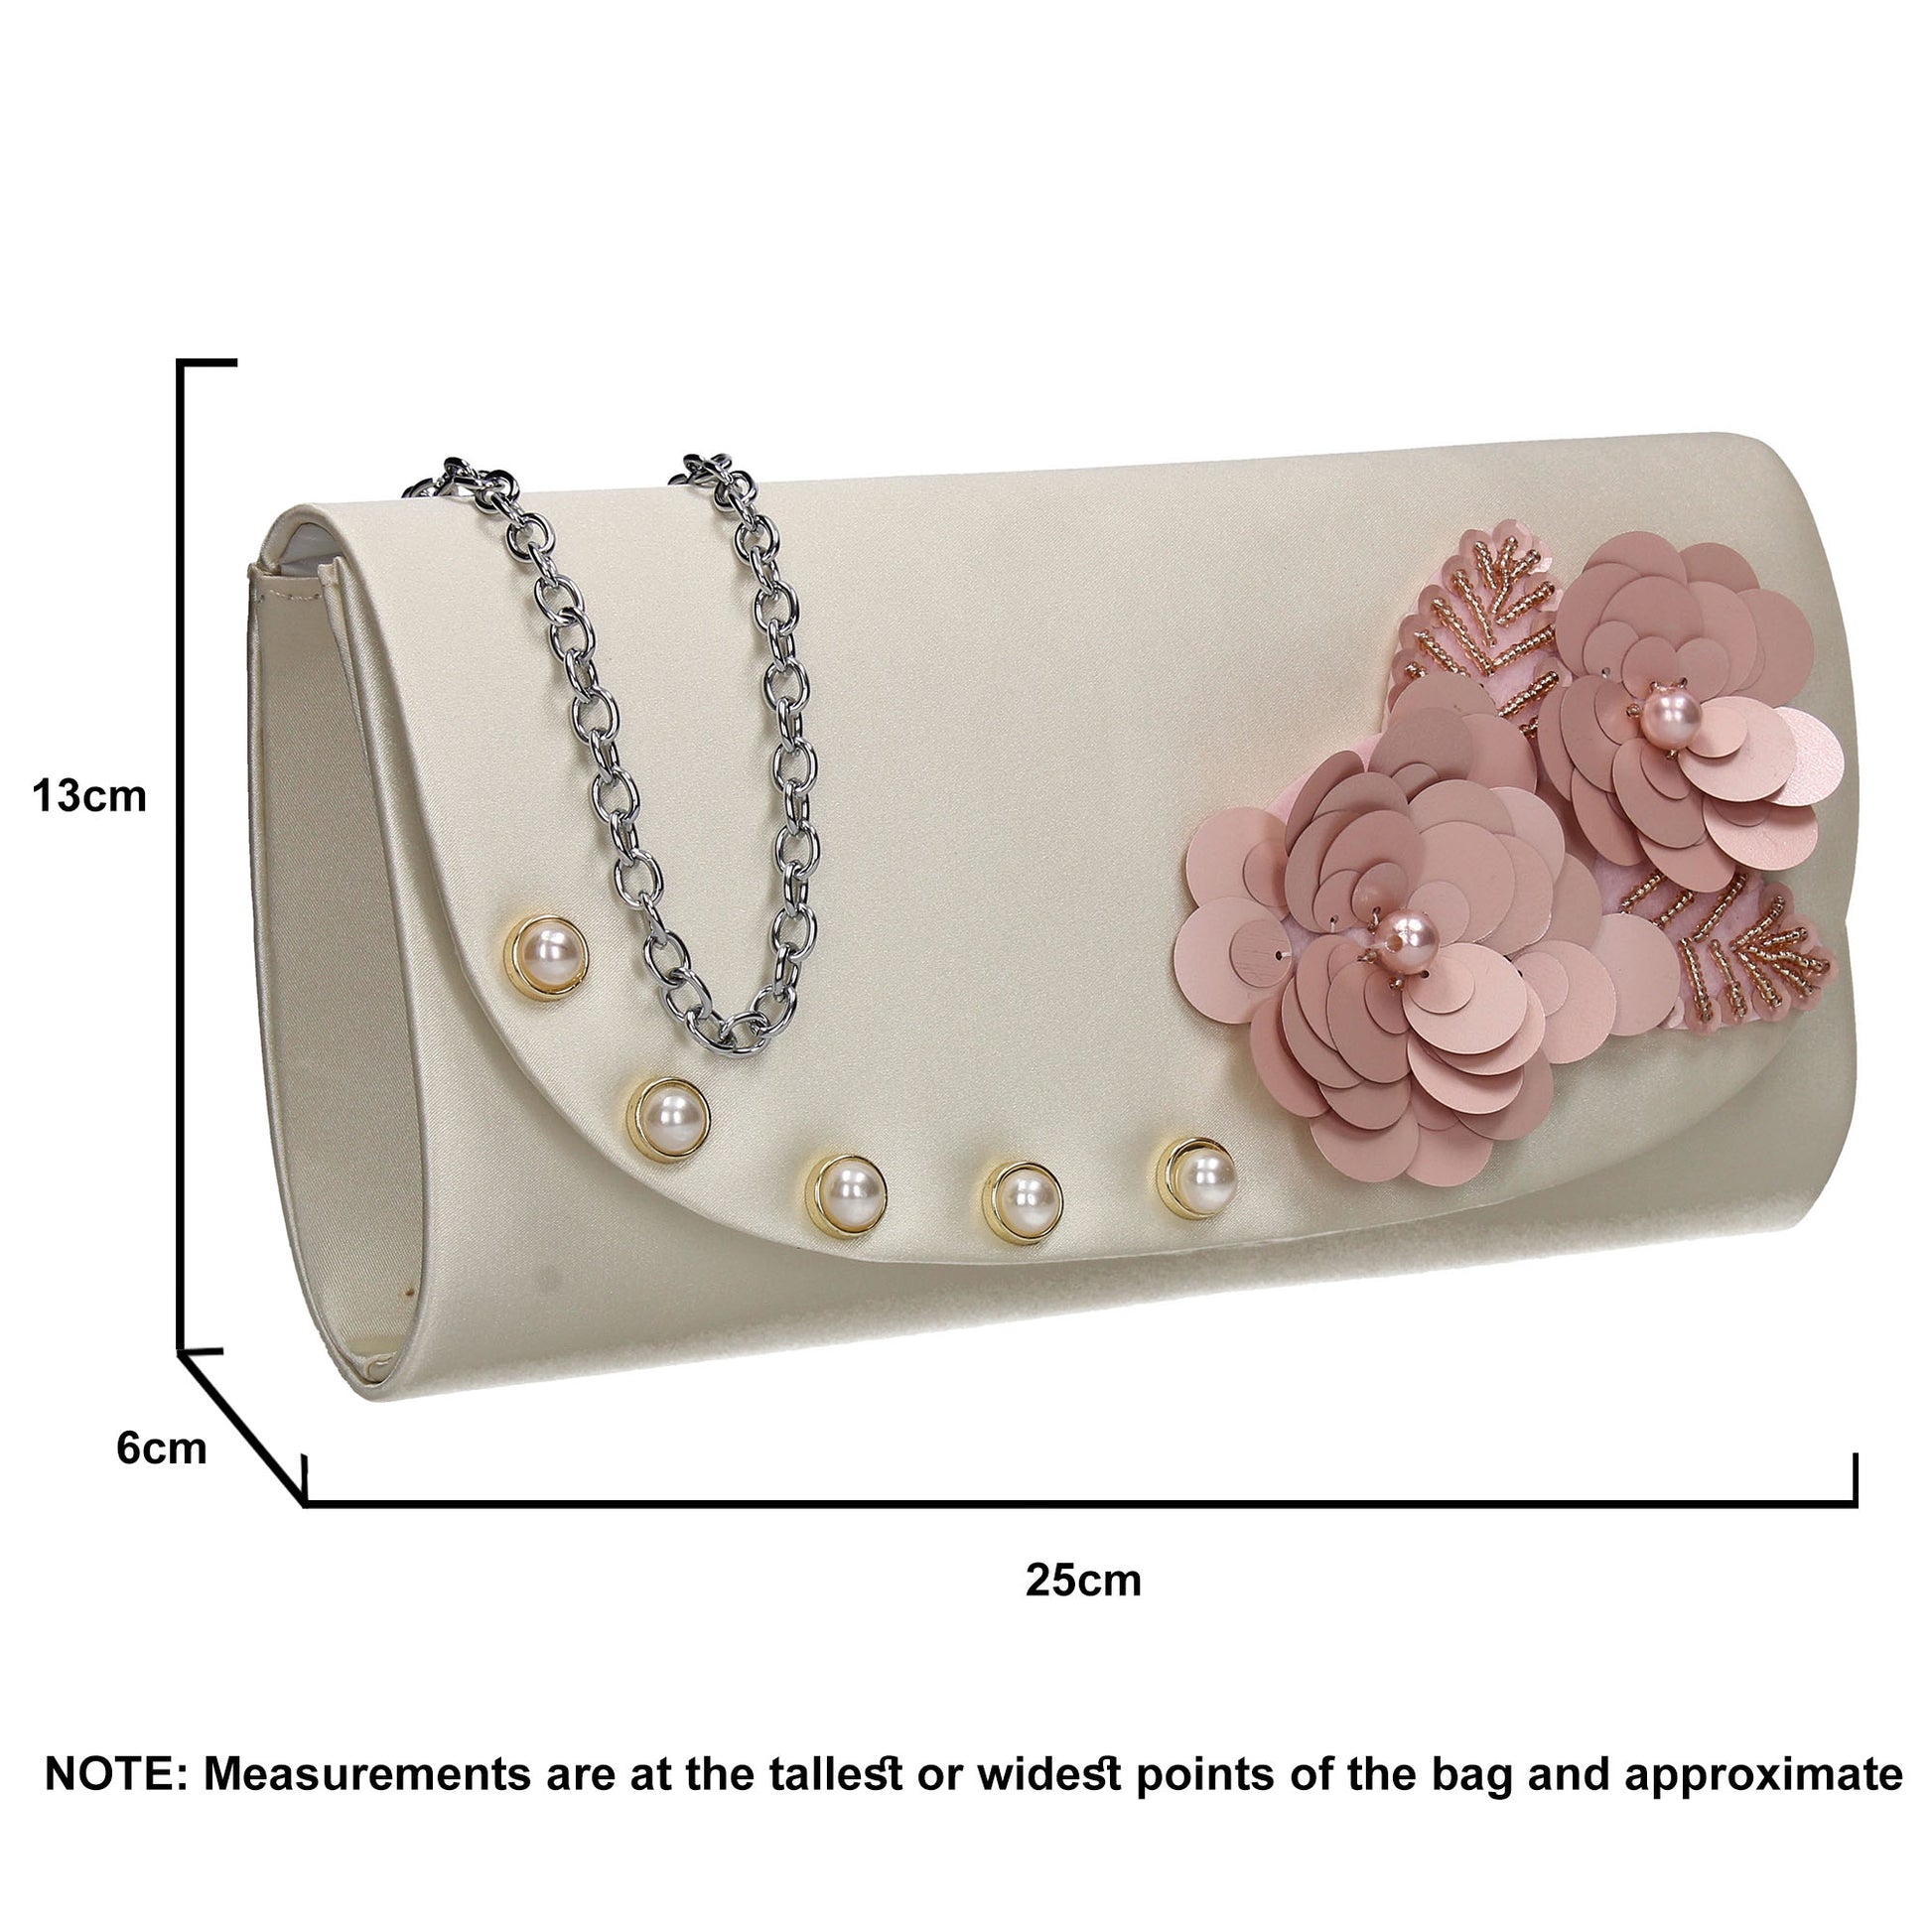 SWANKYSWANS Joyce Clutch Bag Ivory Cute Cheap Clutch Bag For Weddings School and Work